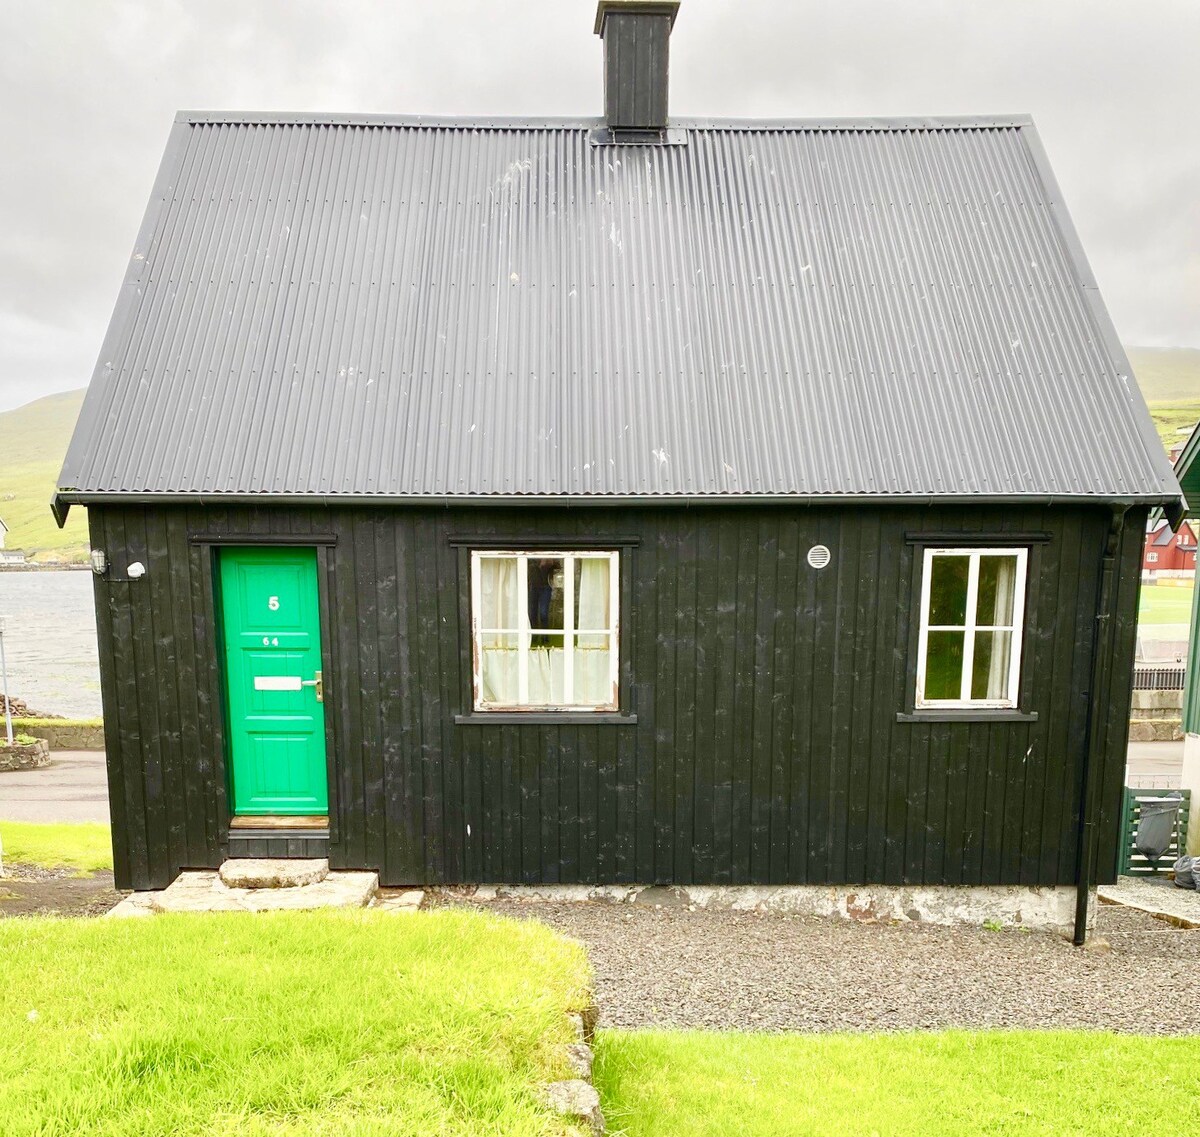 Miðvágur的传统Faroese House